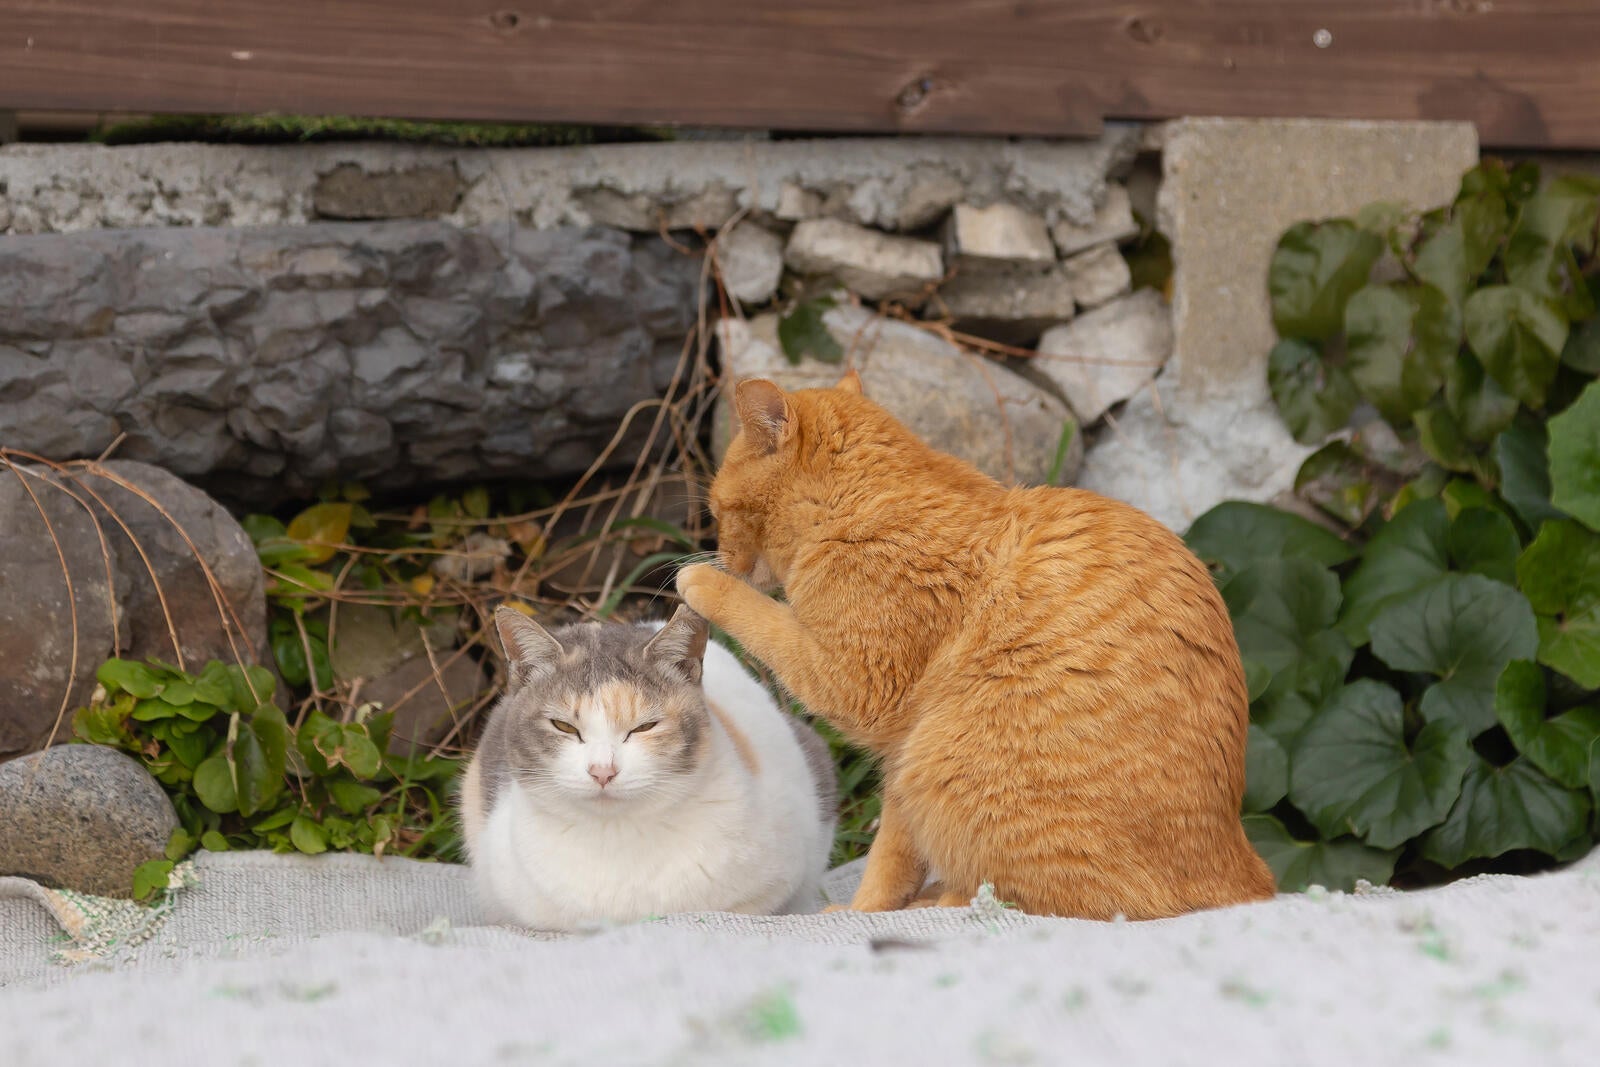 Gato laranja cochichando no ouvido de gato branco bicolor